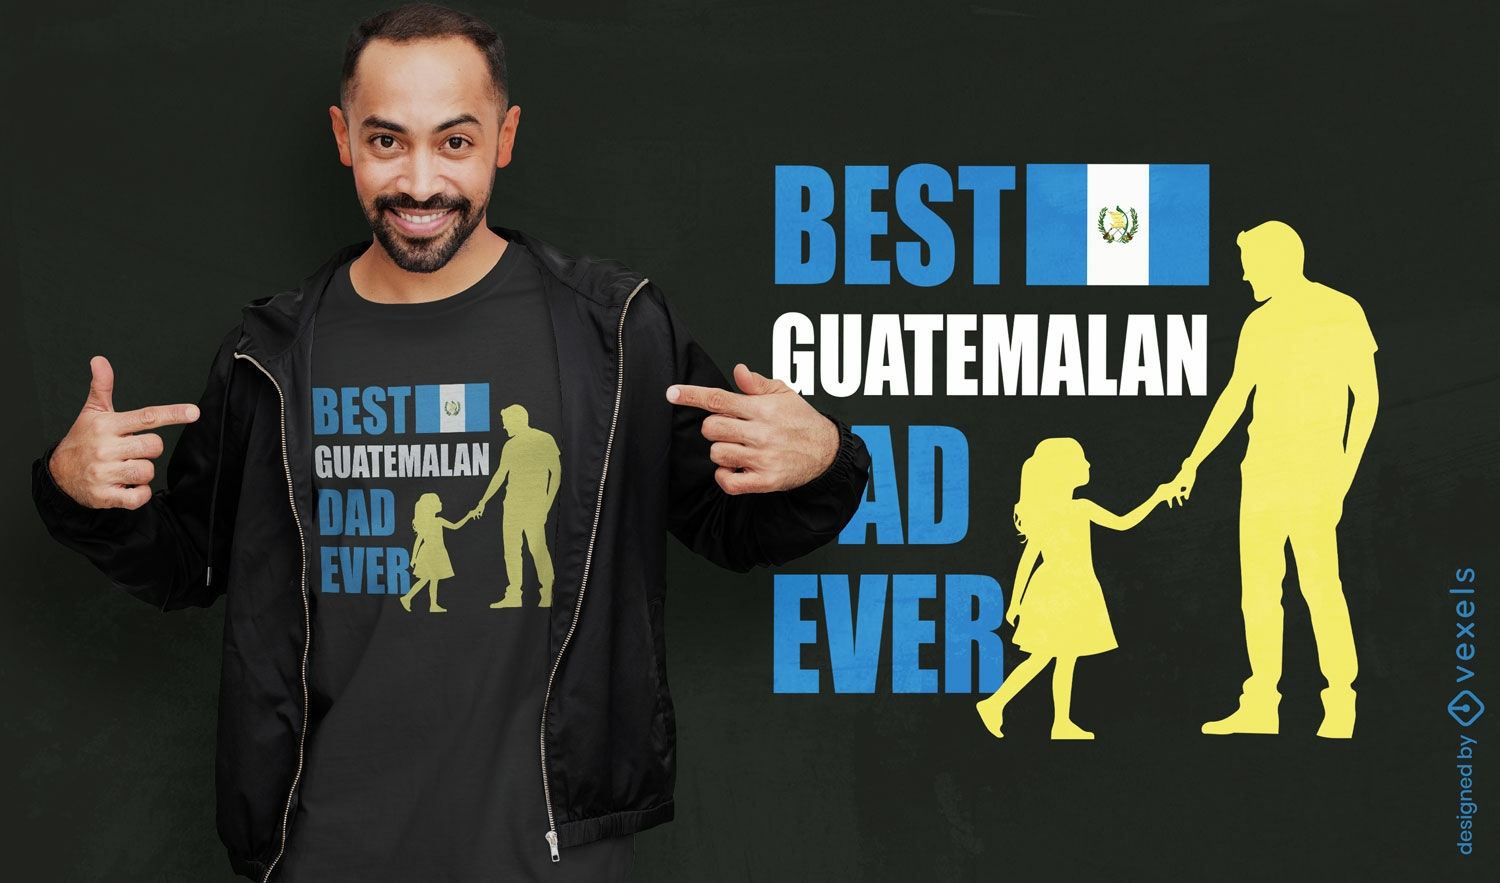 Diseño de camiseta de padre guatemalteco.